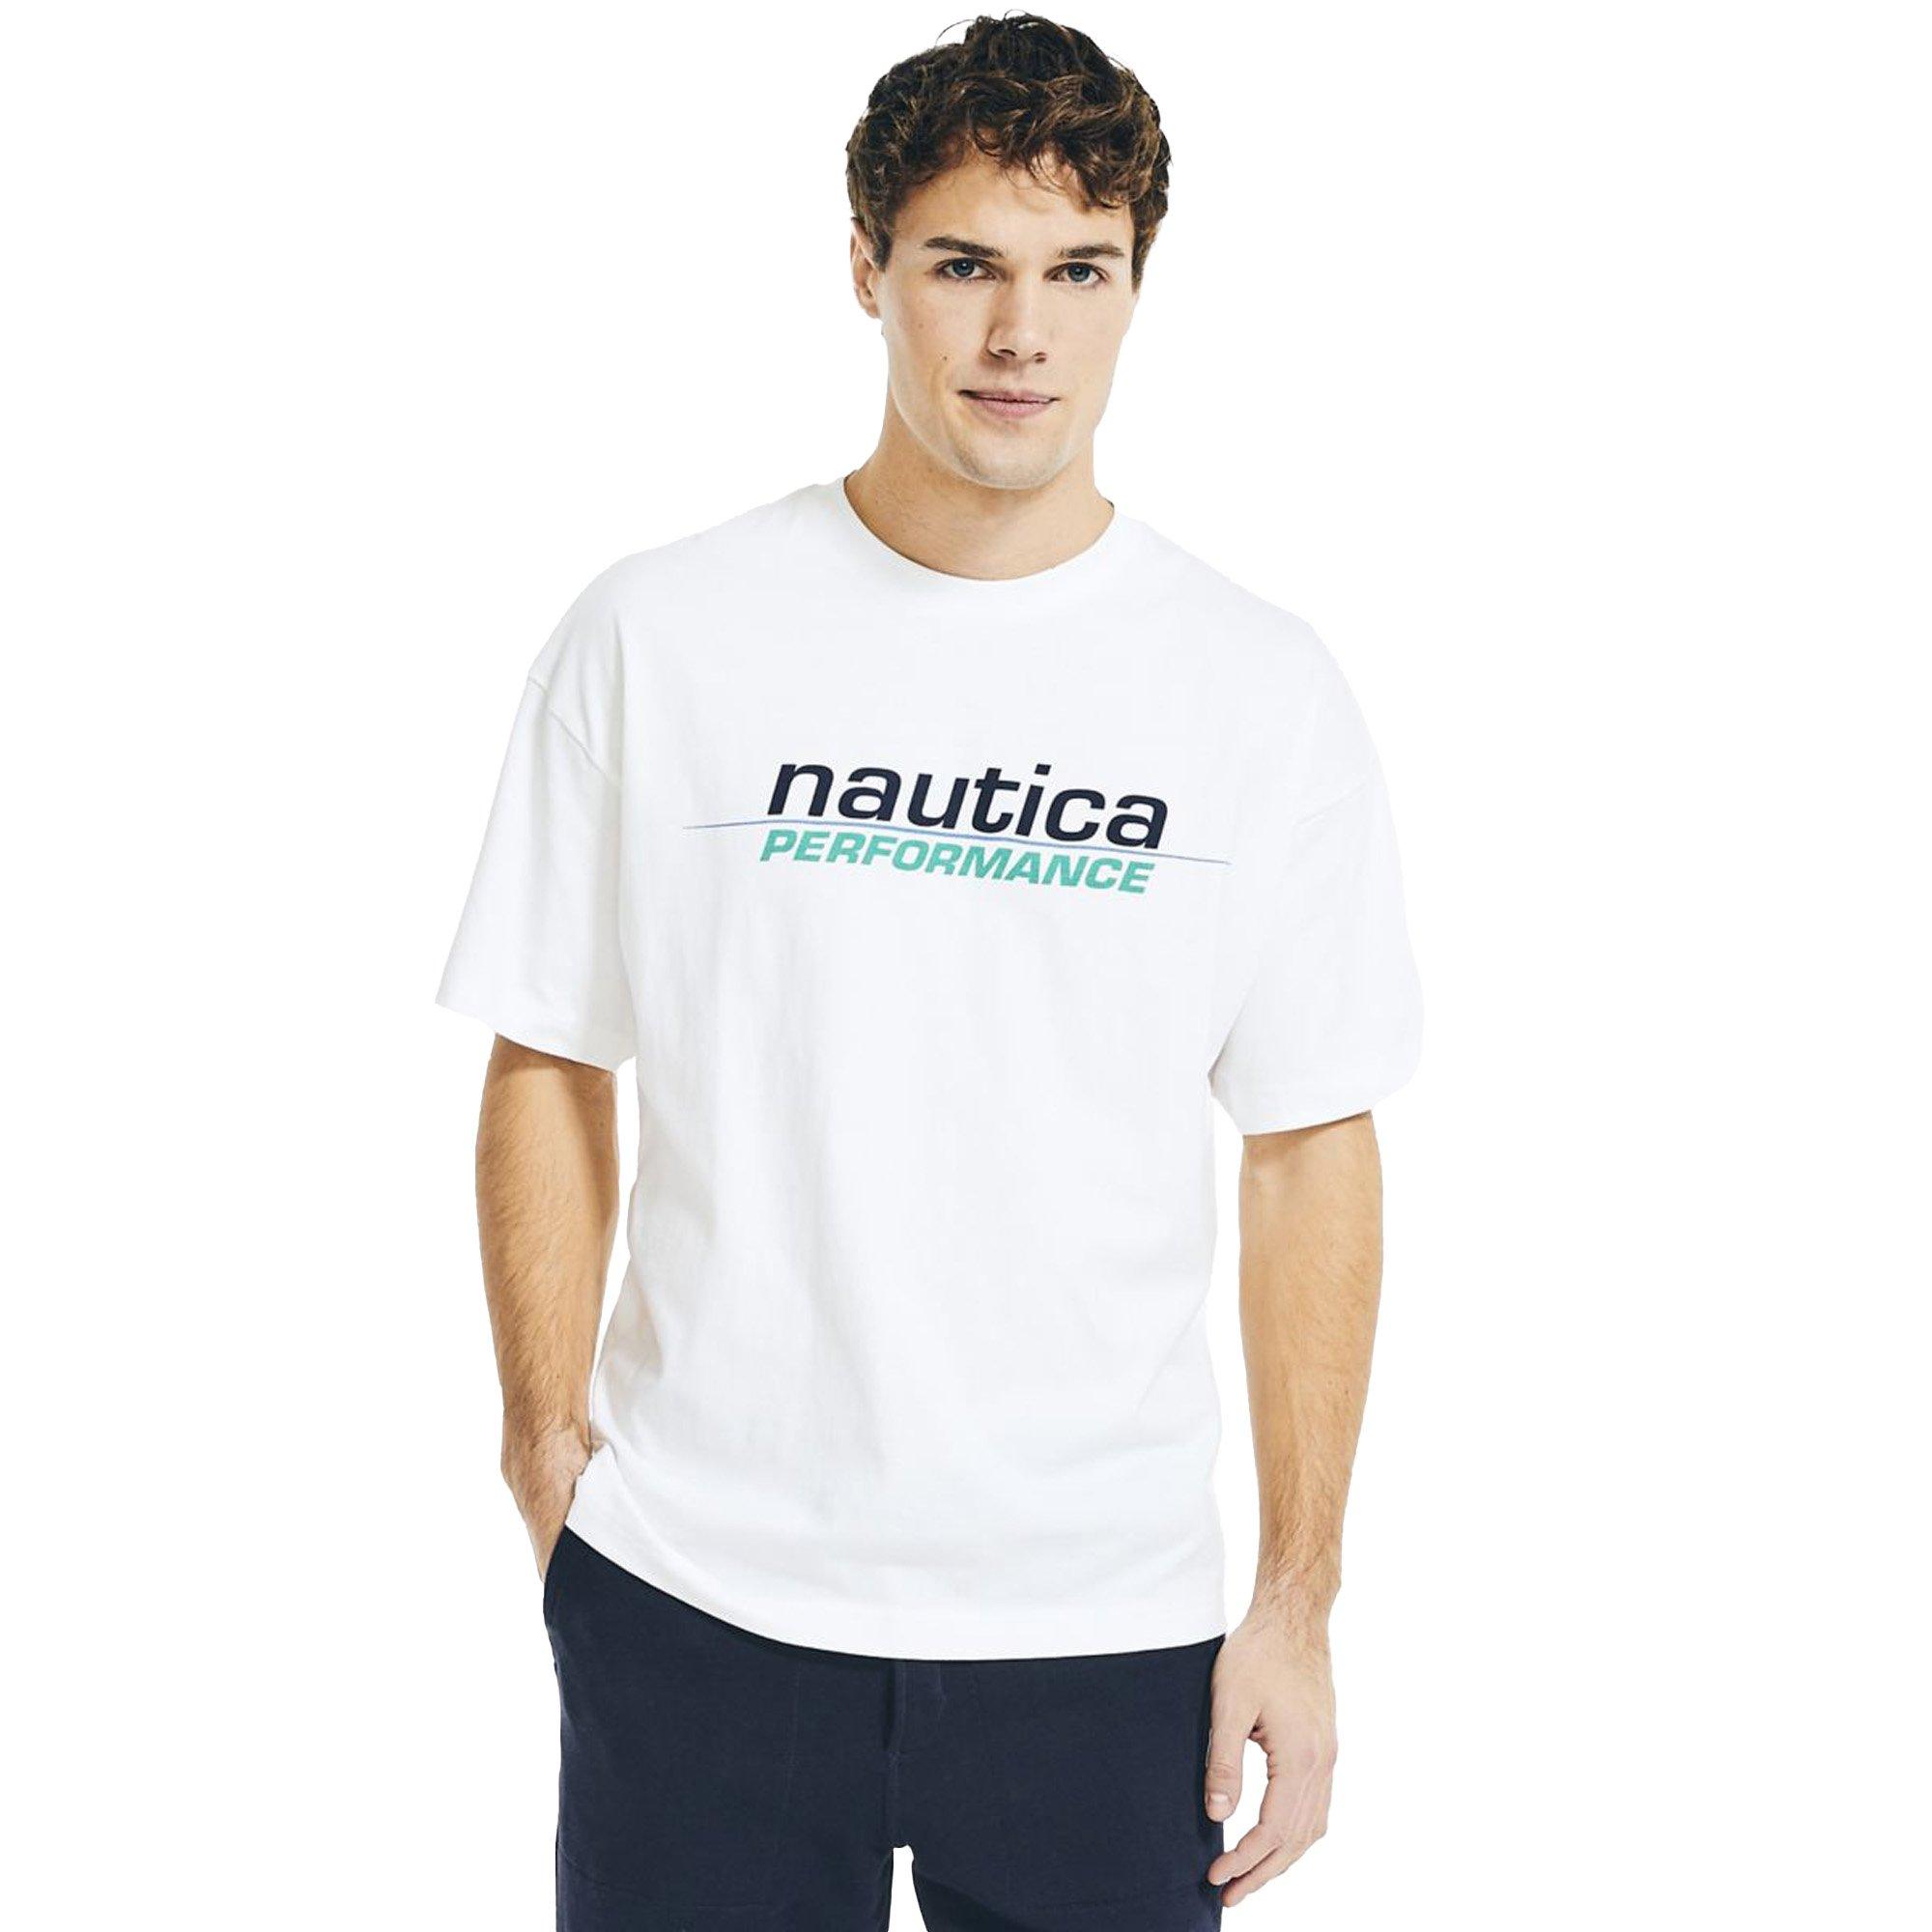 Nautica Men's Performance Tee-White